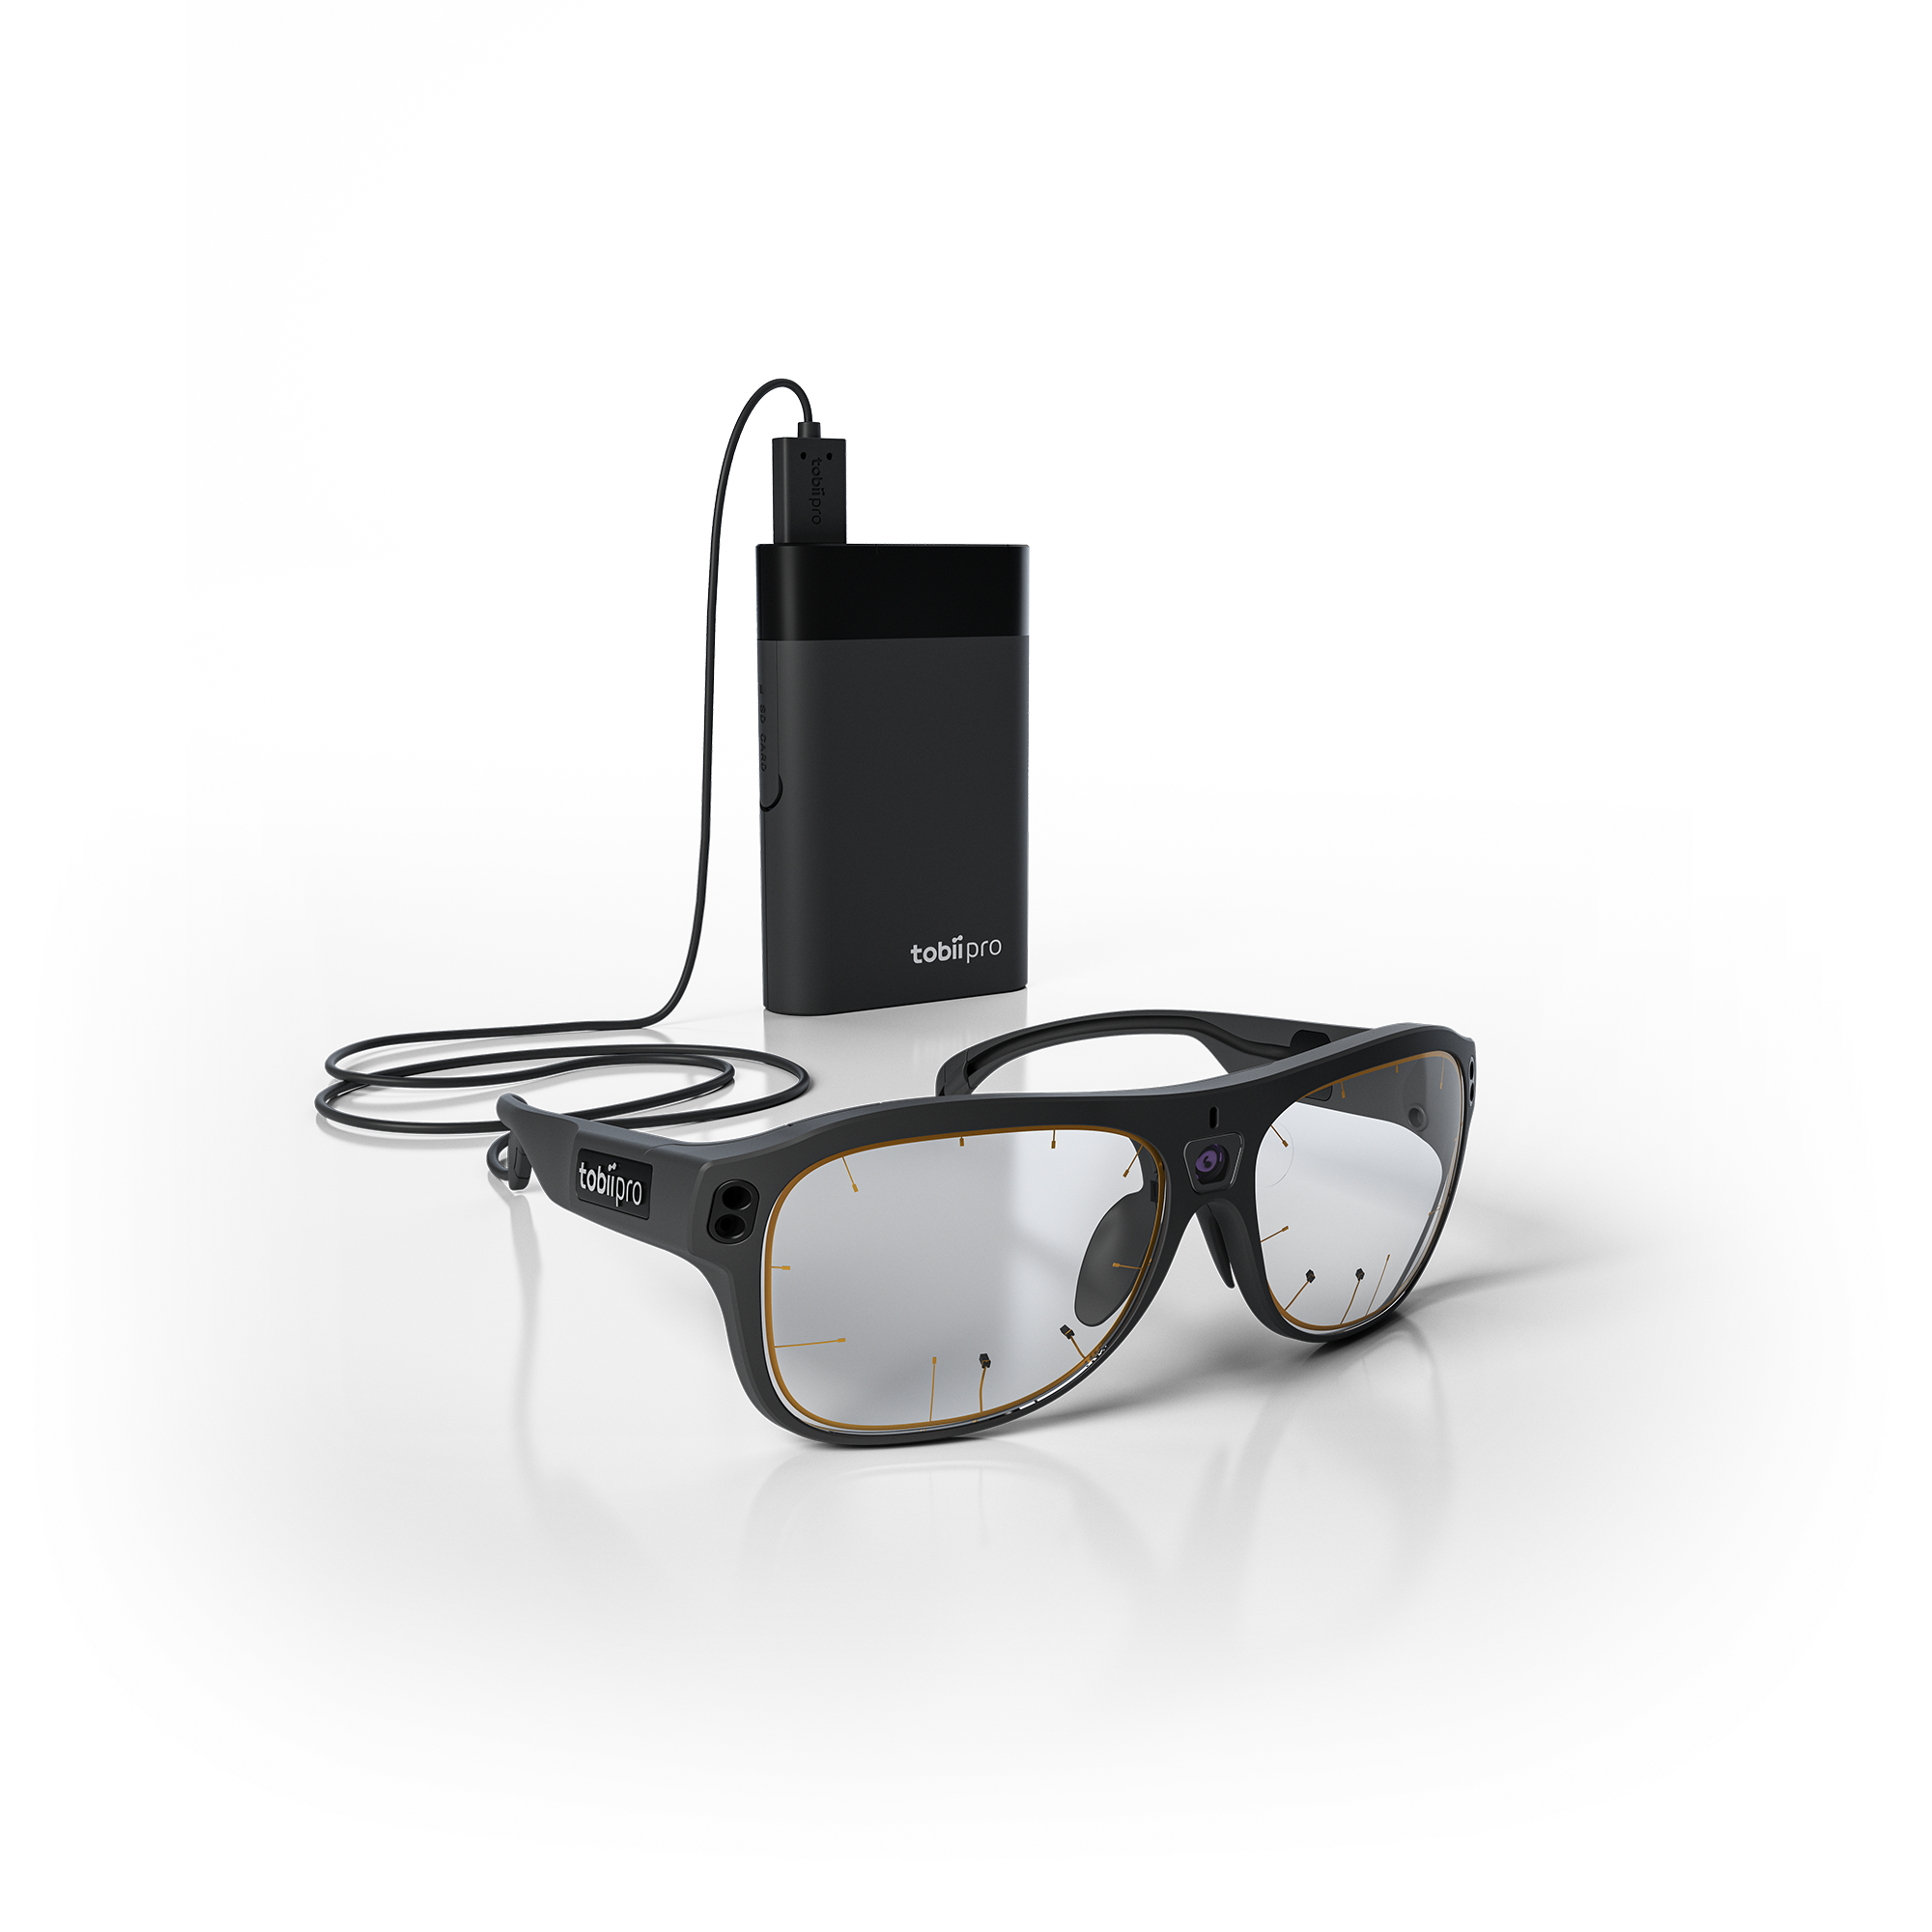 Tobii Pro Glasses 3  Latest in wearable eye tracking - Tobii